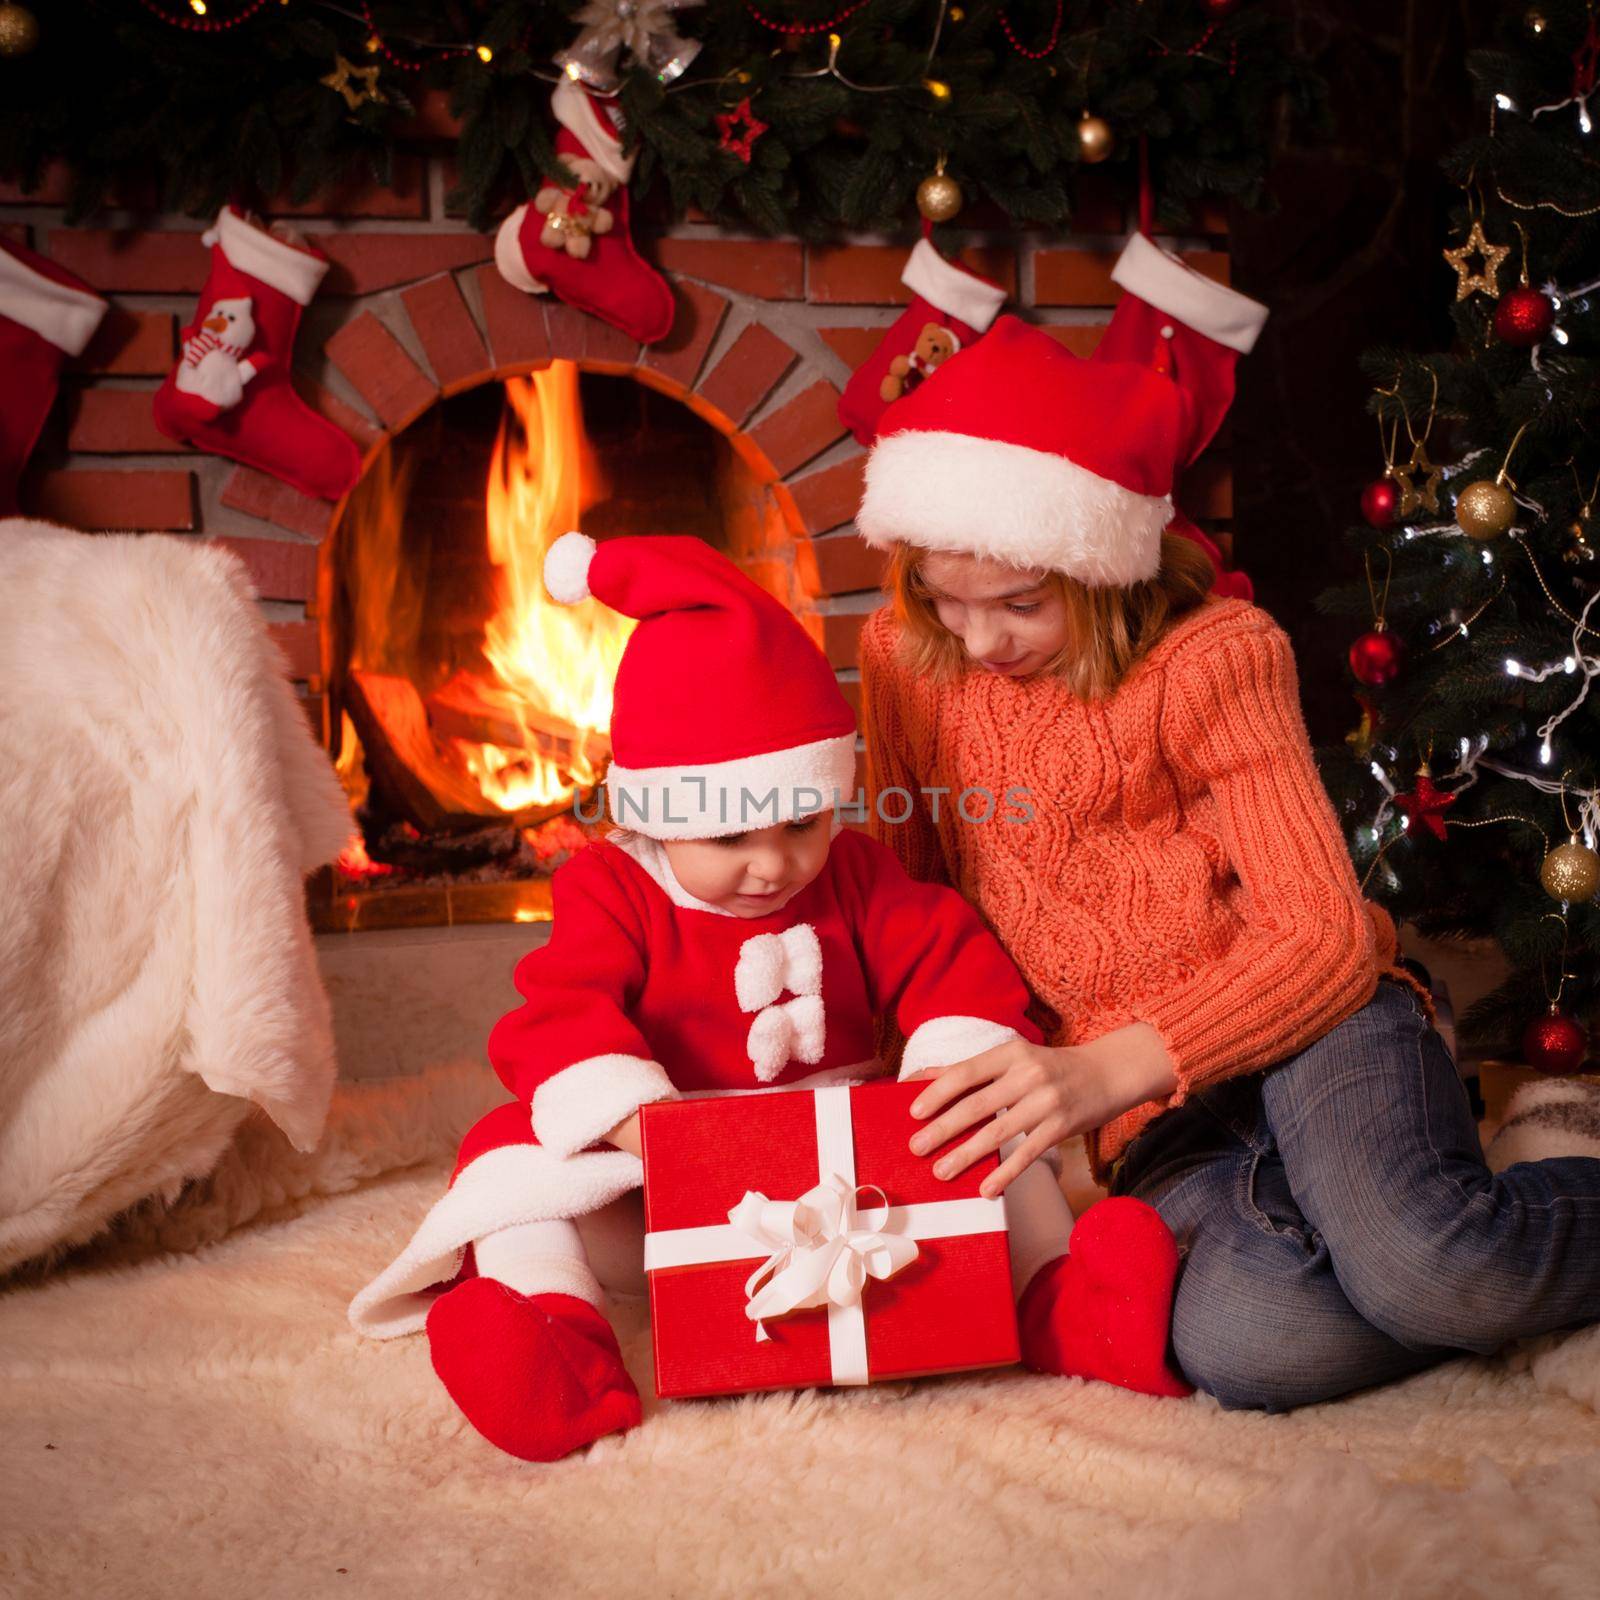 Christmas fireplace by oksix